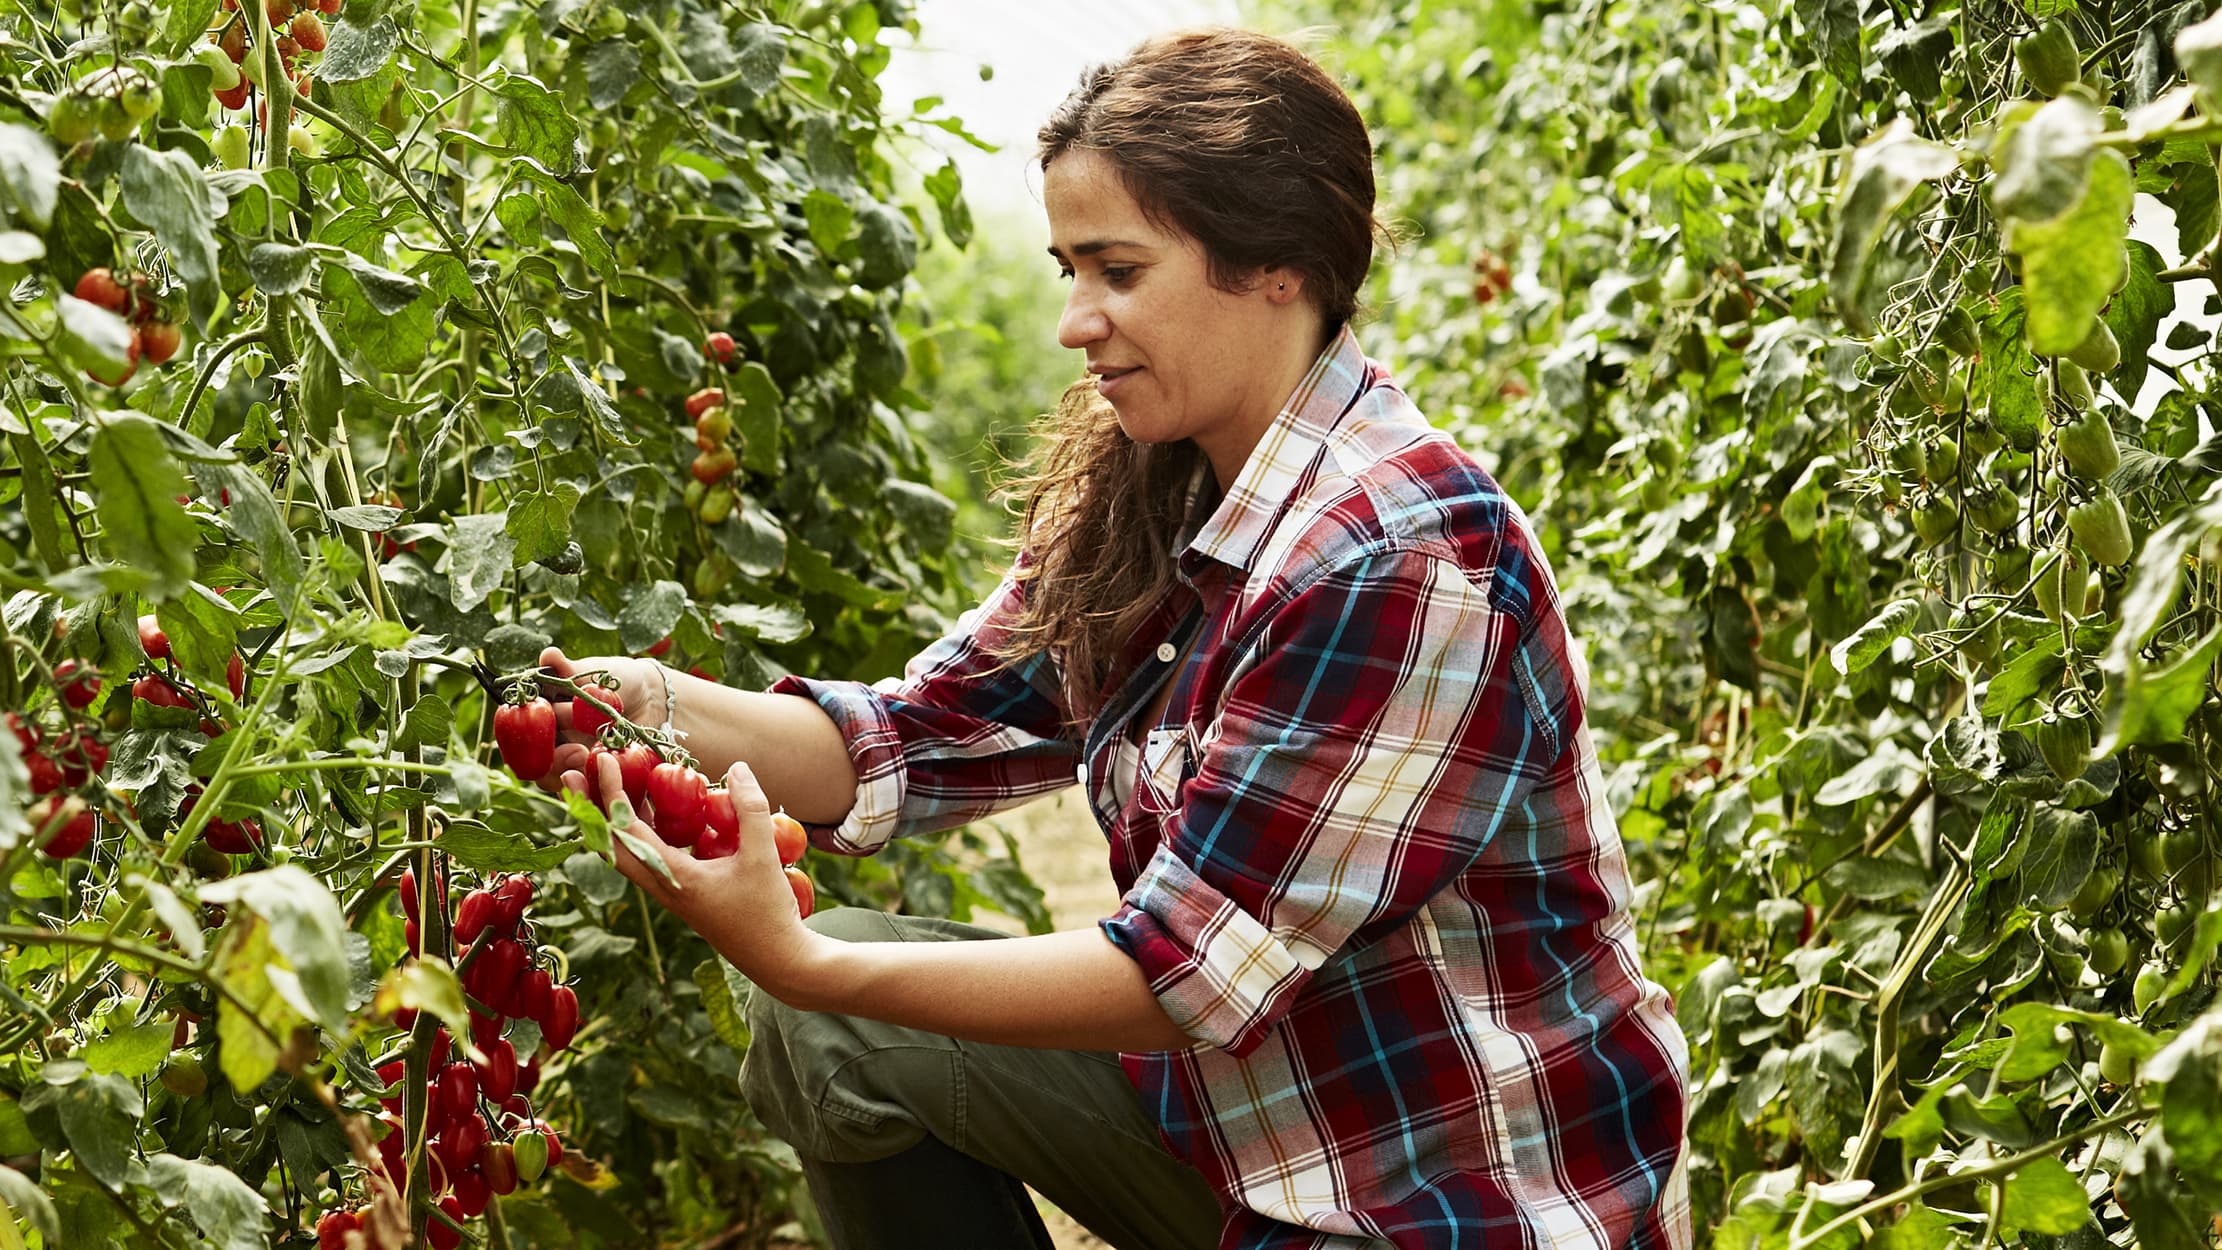 Woman in farm plucking tomatoes